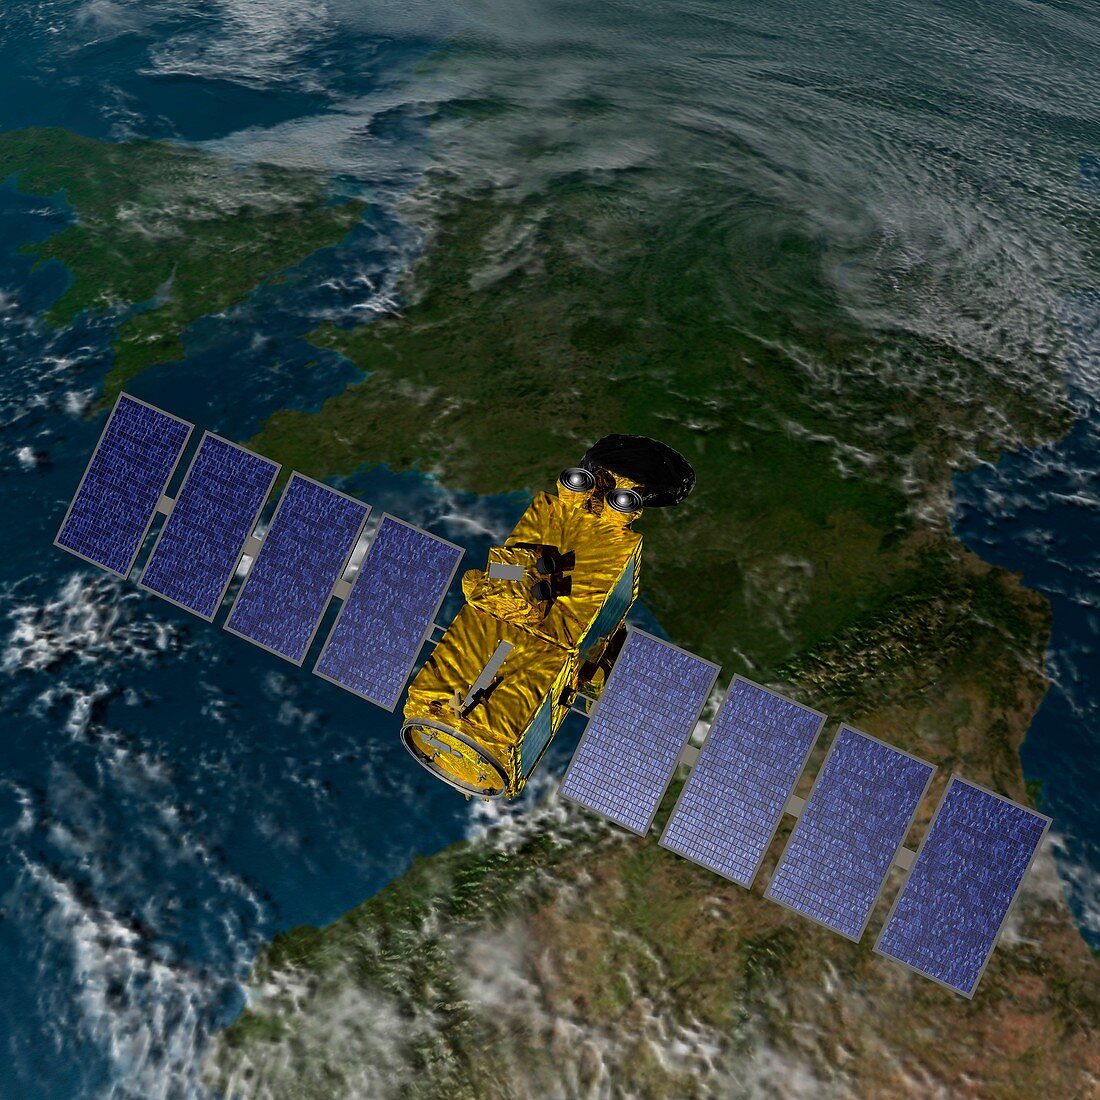 Jason-3 satellite,artwork